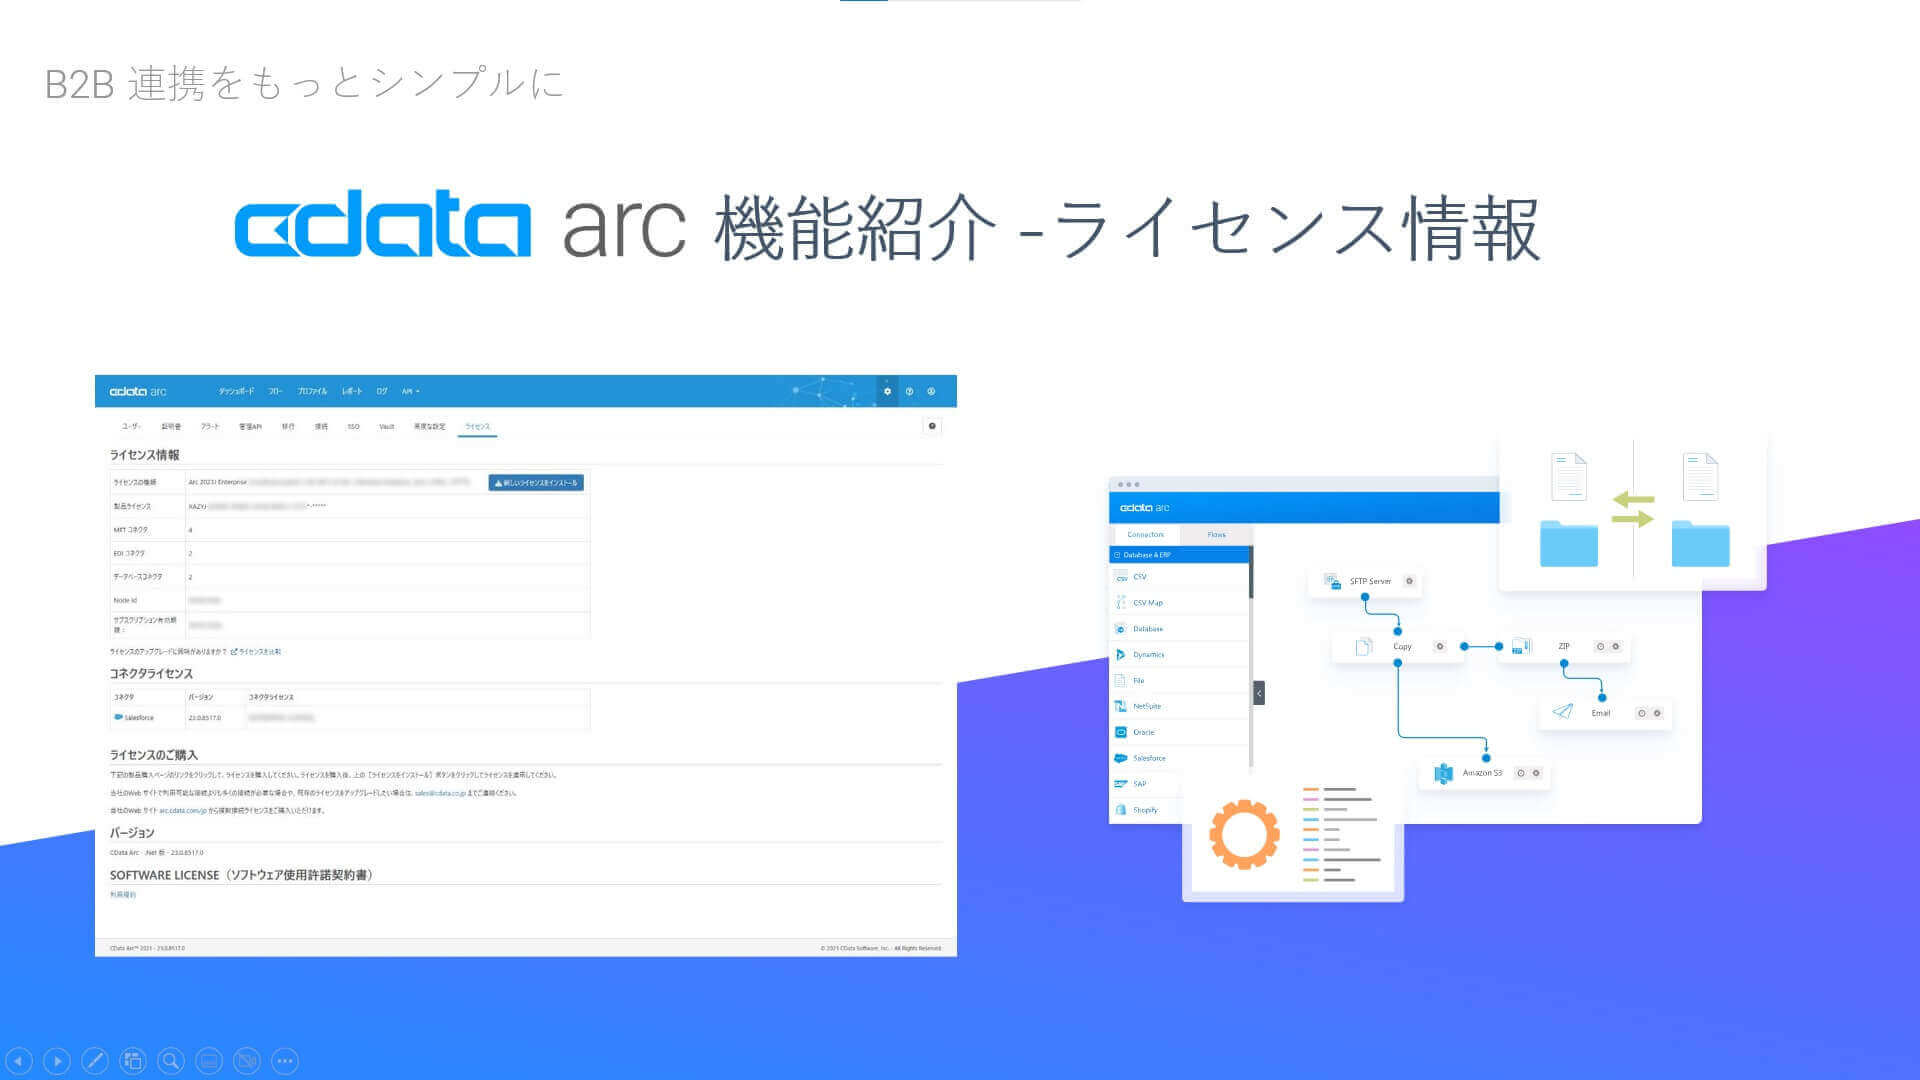 CData Arc 機能紹介 - ライセンス情報